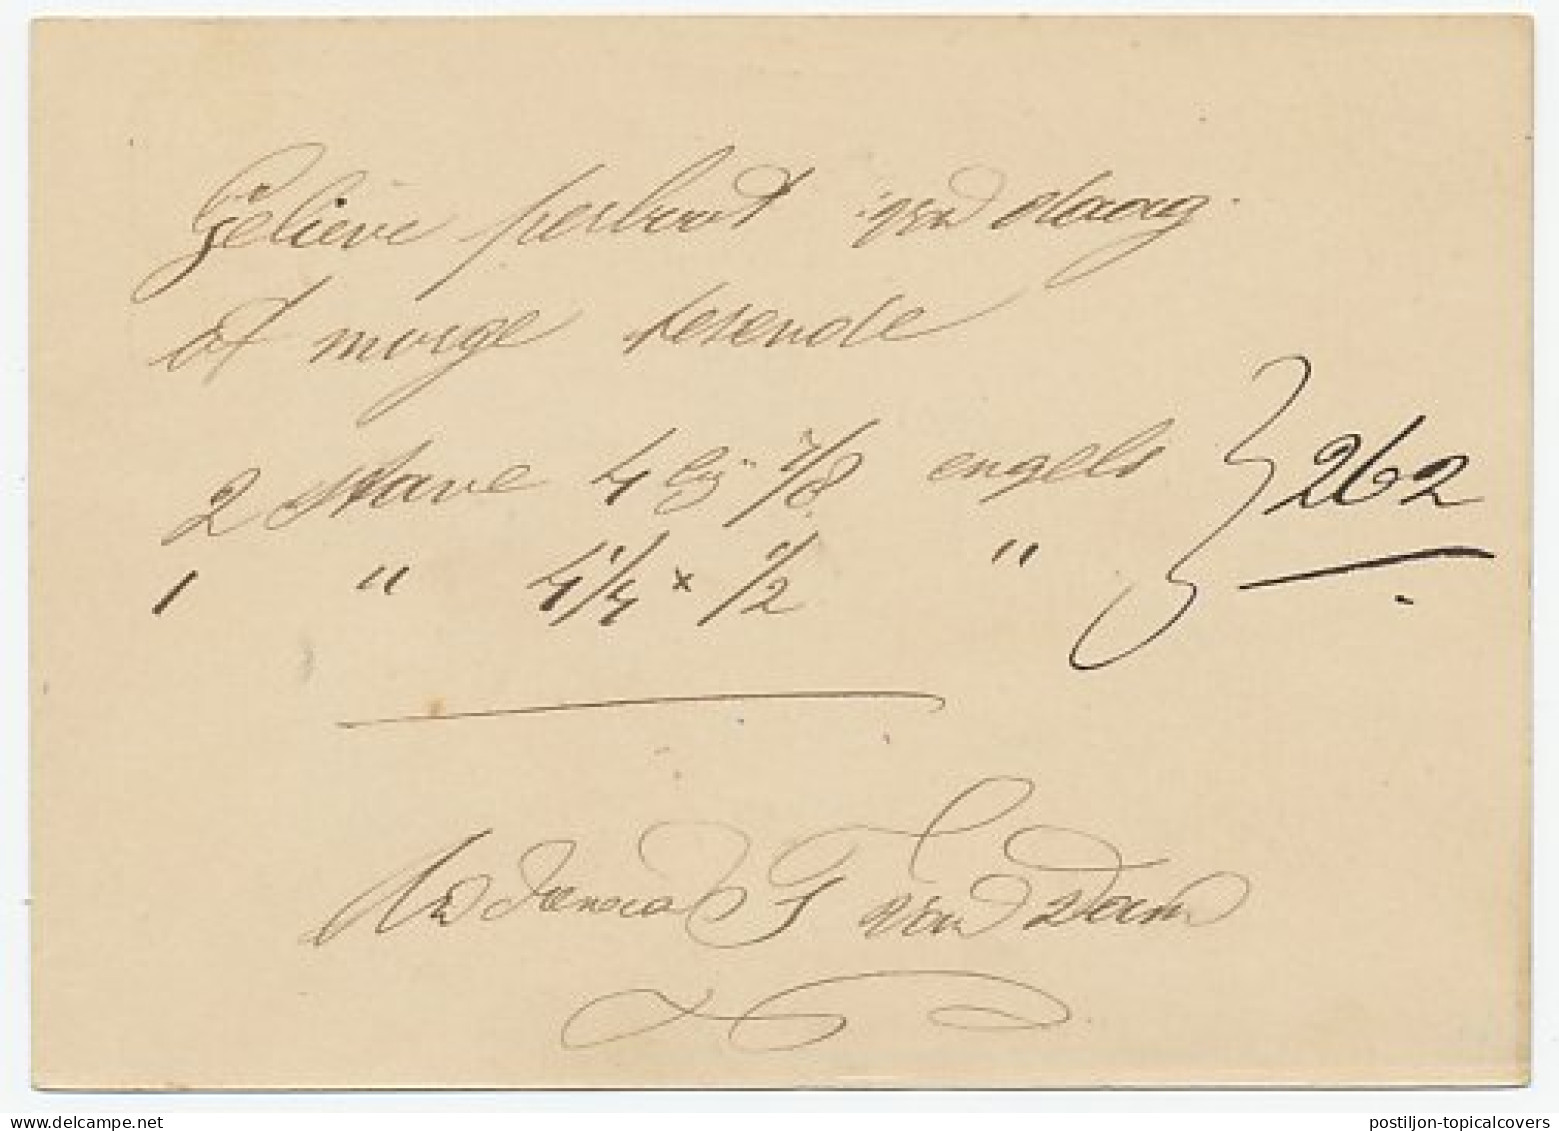 Naamstempel Kinderdijk 1879 - Lettres & Documents